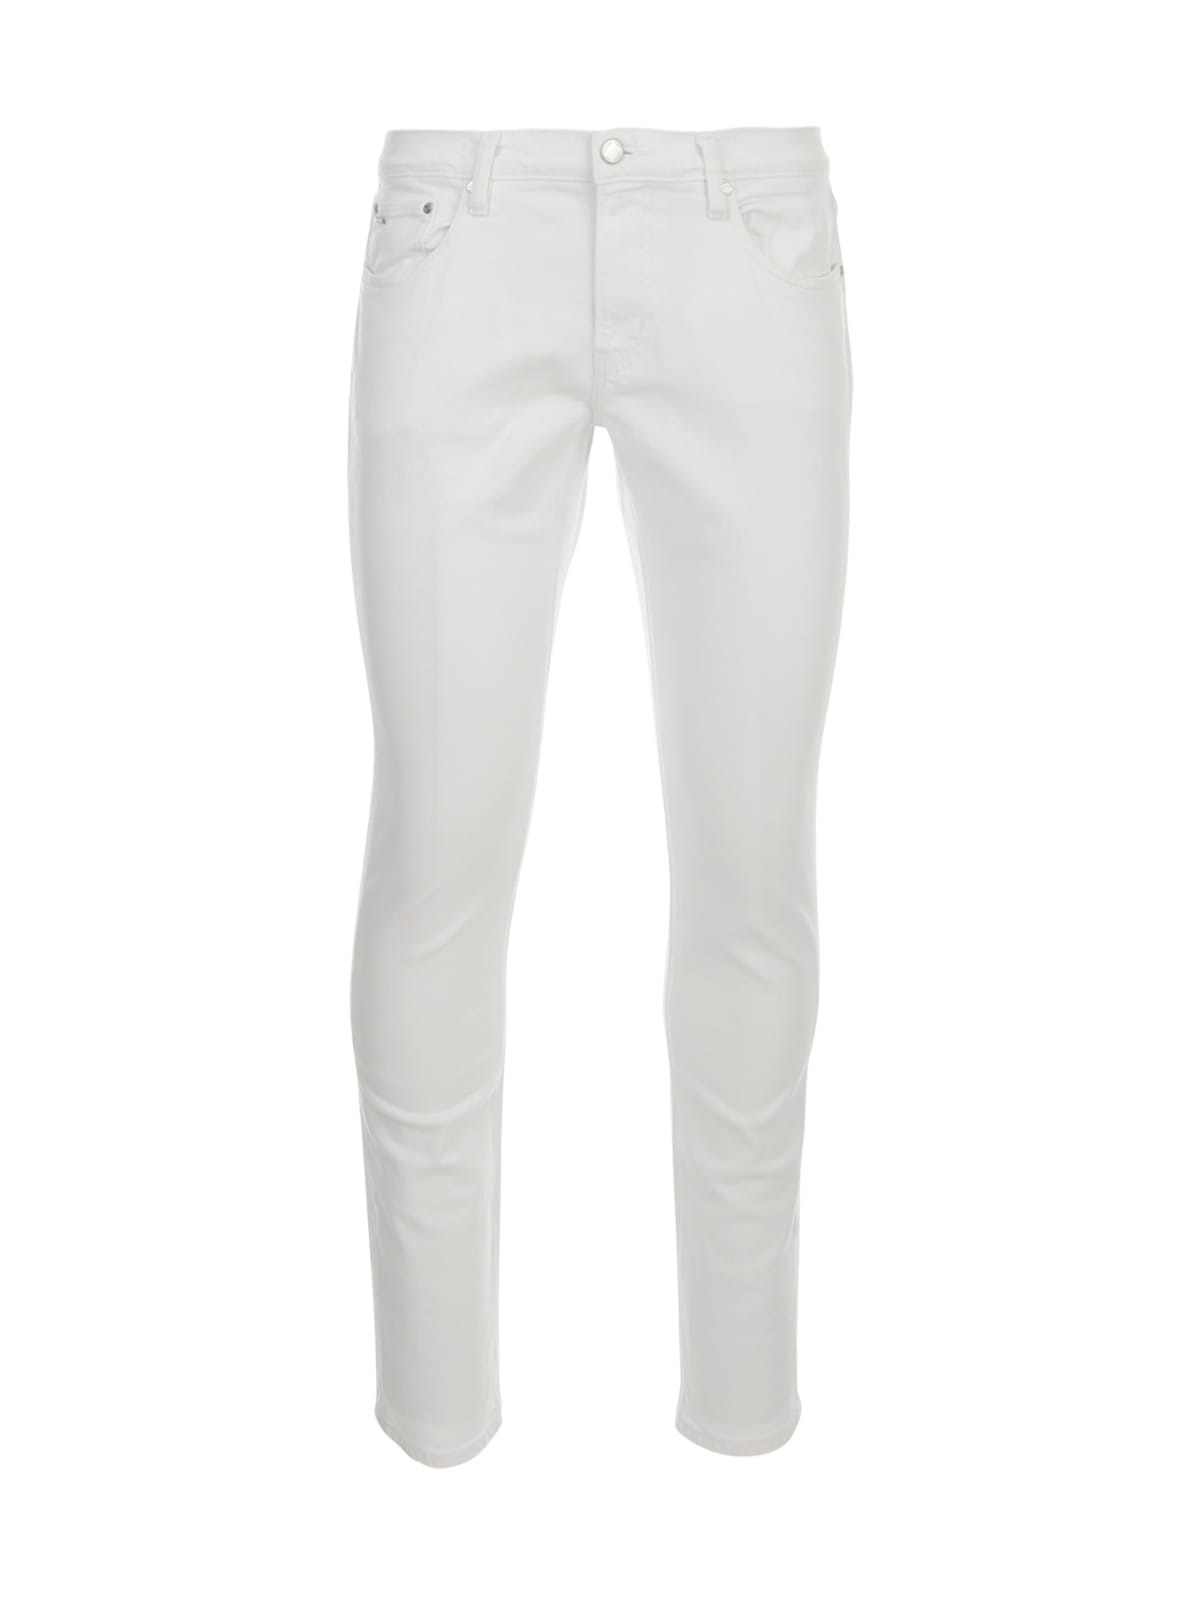 Michael Kors Kent White Jeans